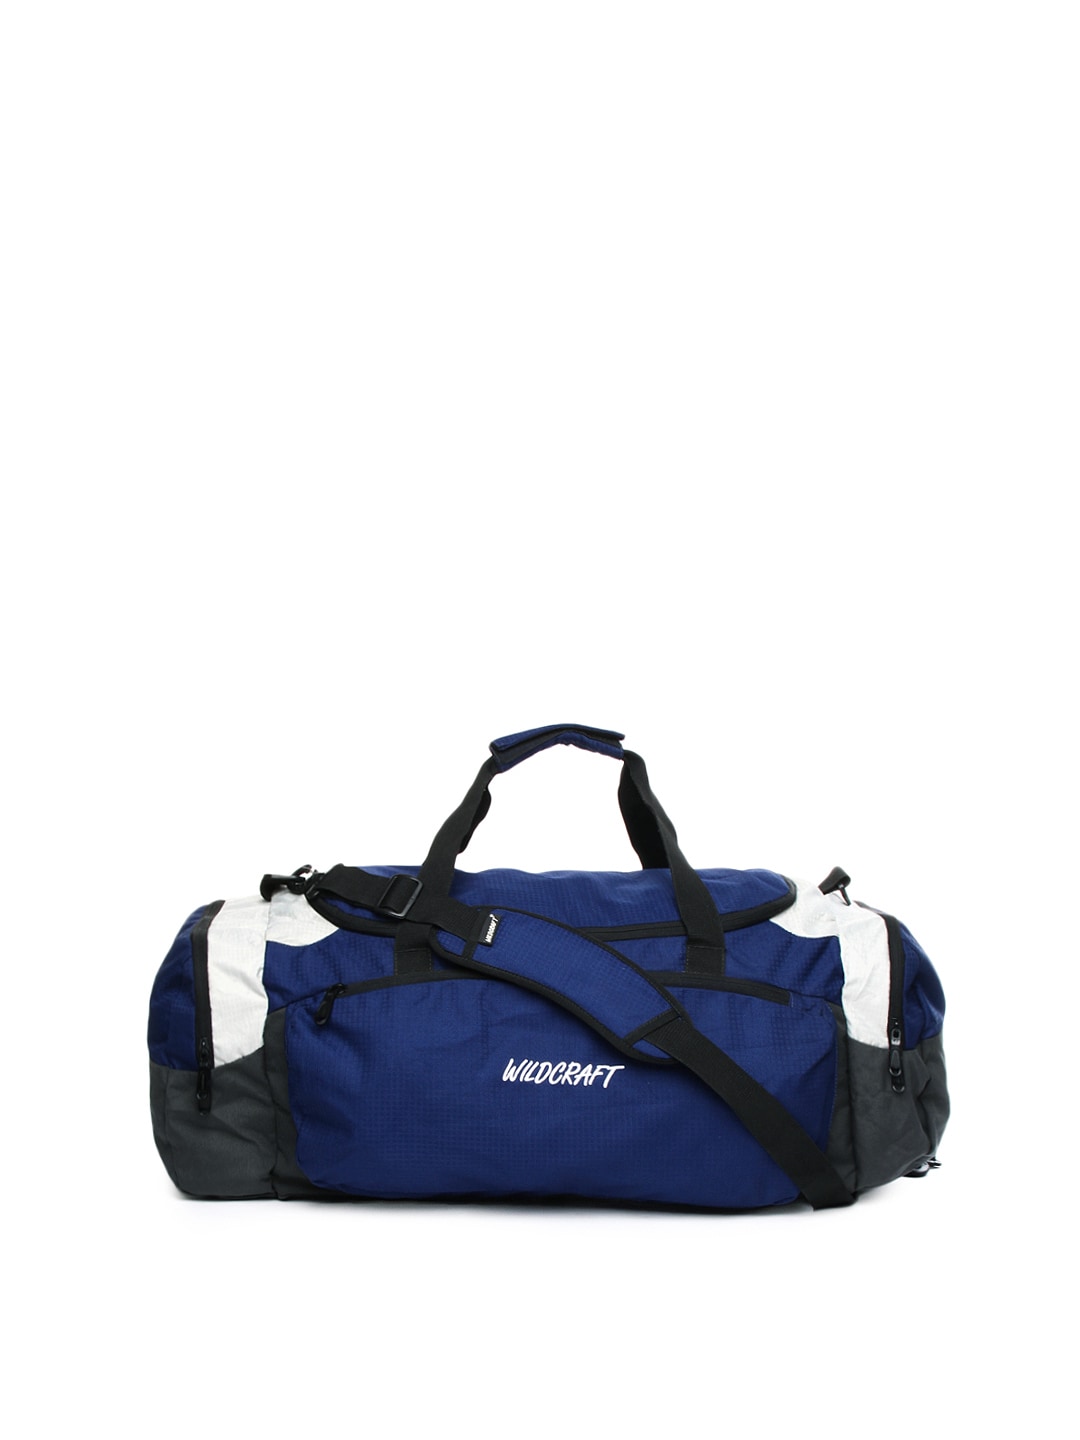 Wildcraft Unisex Blue Duffle Bag